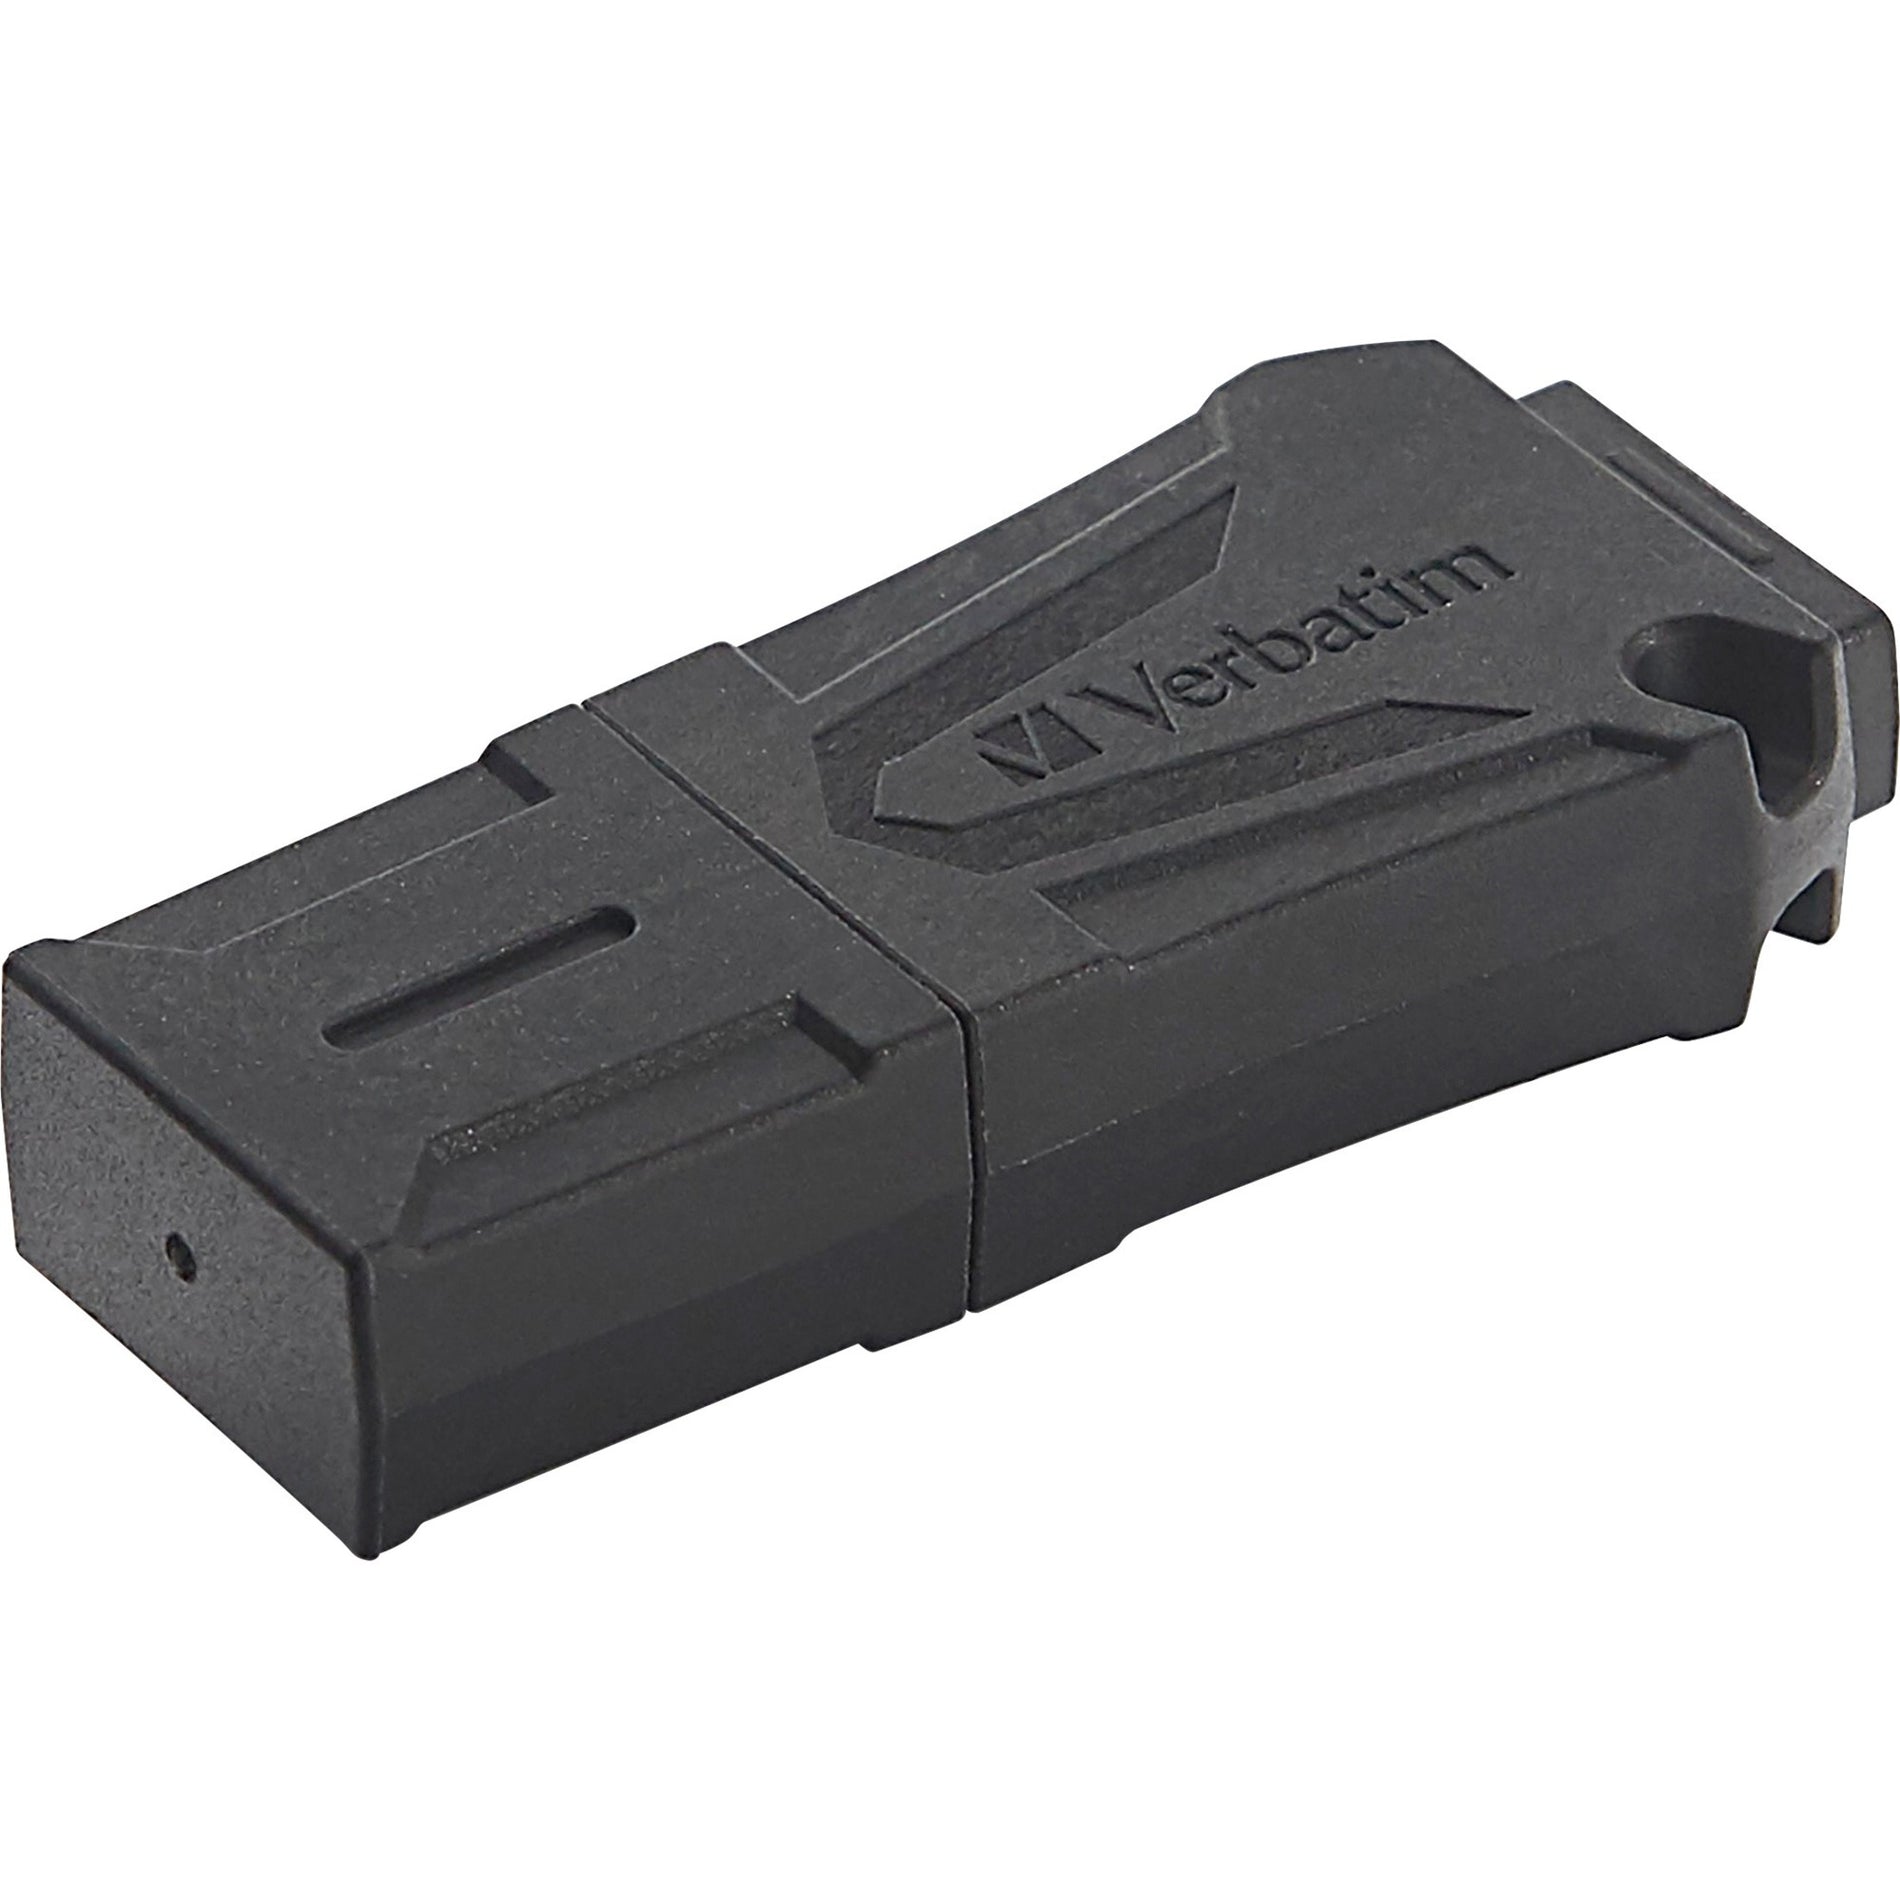 Verbatim 70000 ToughMAX 16GB USB Flash Drive, Lifetime Warranty, UL Listed Certification